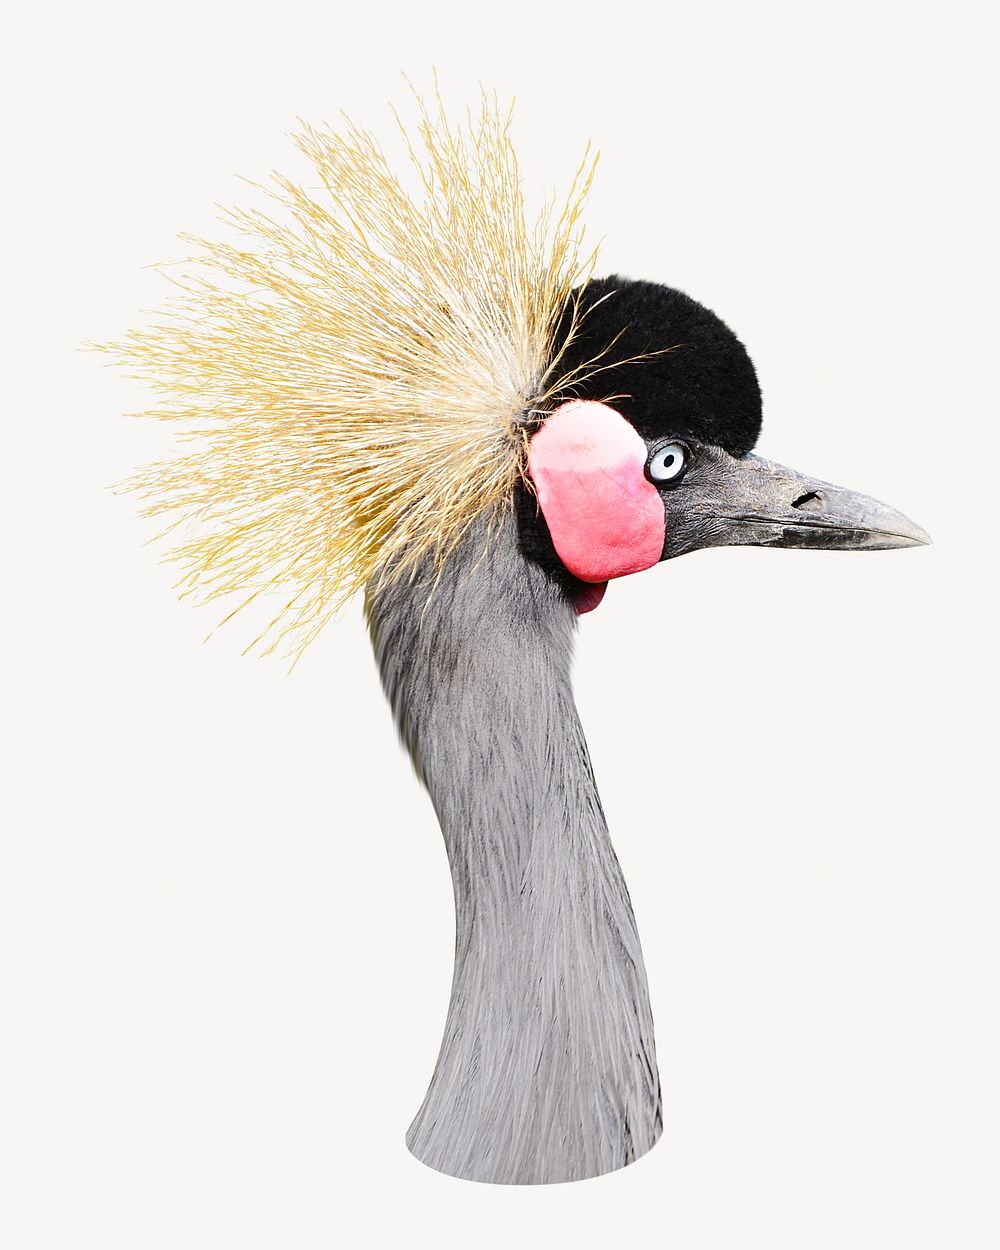 Grey crowned crane image on white design